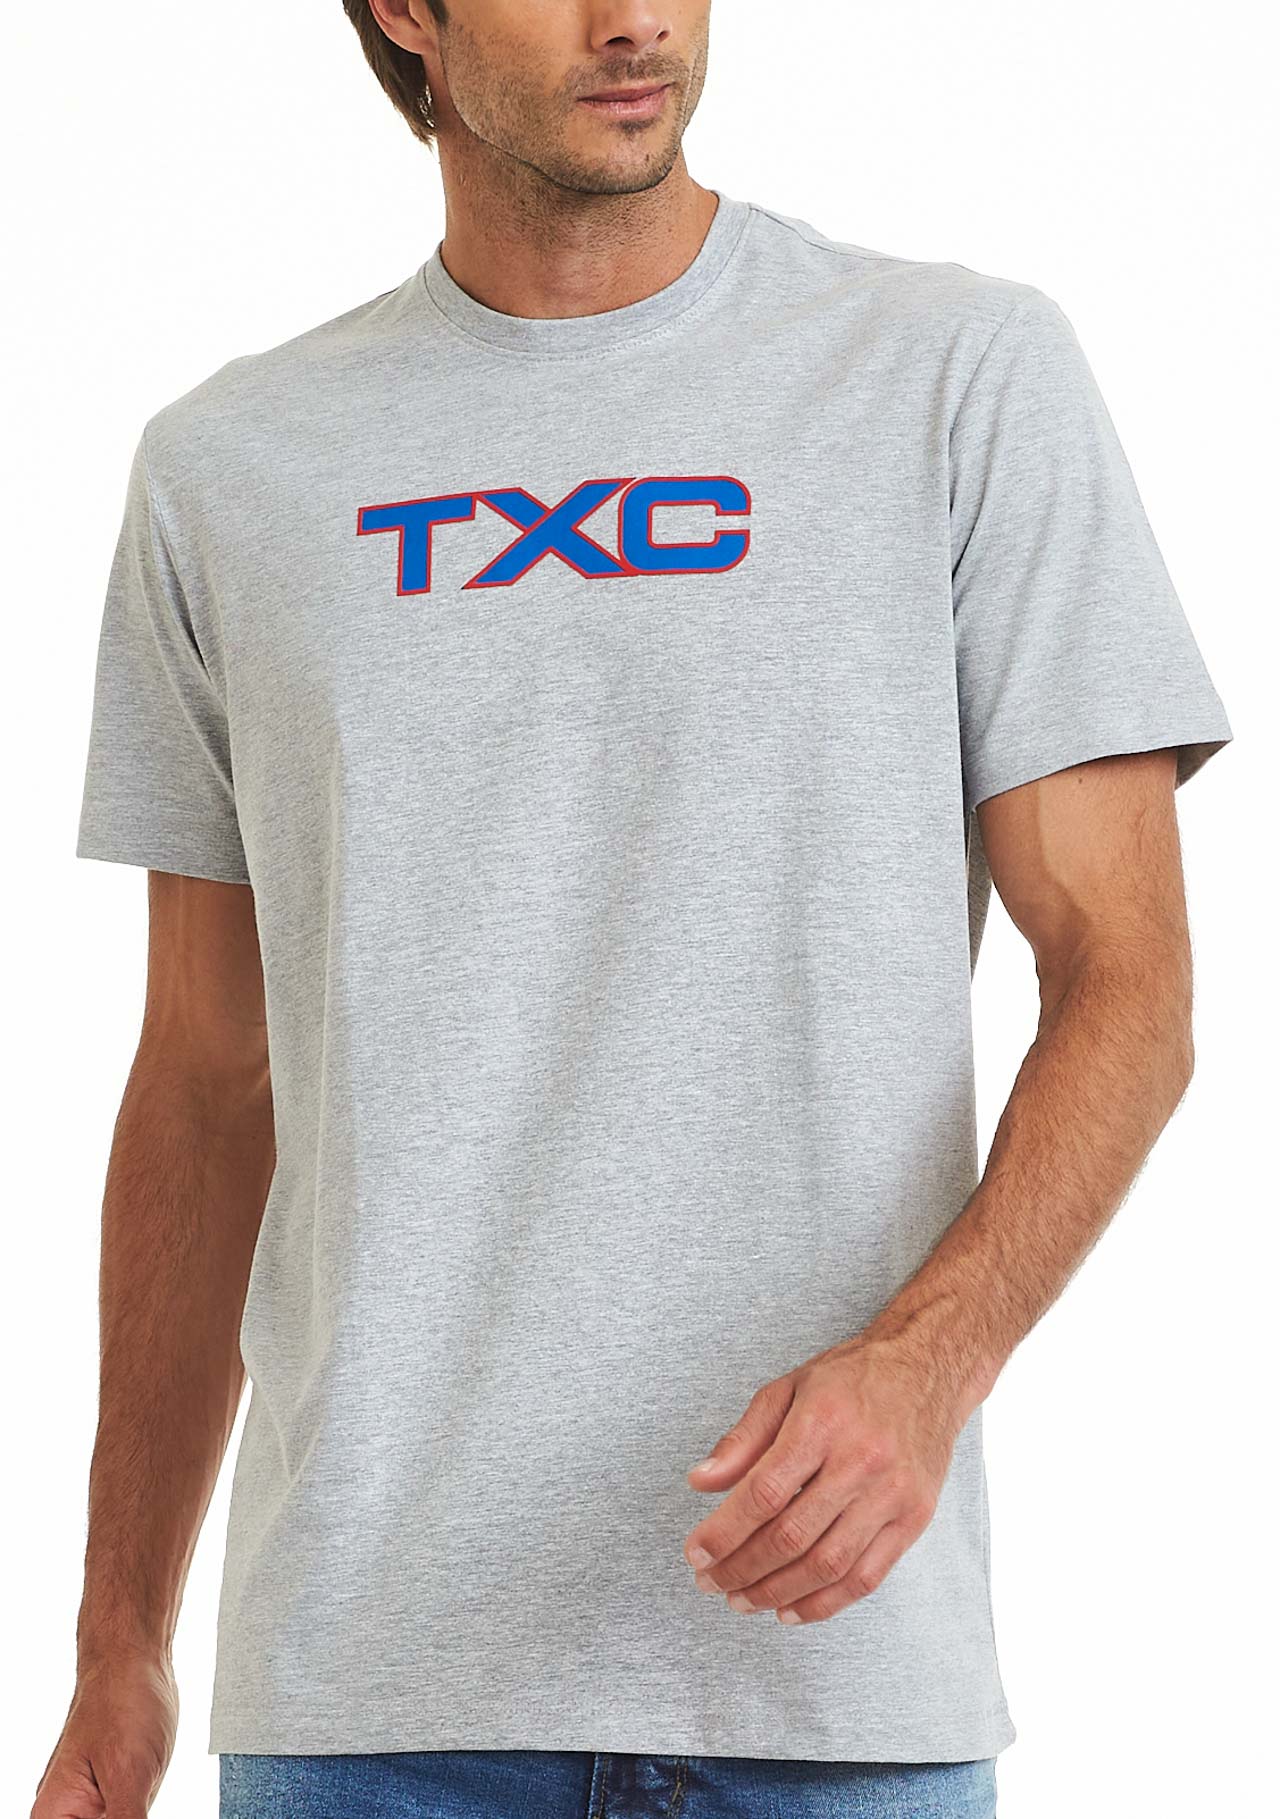 Camiseta TXC Brand 191274 Mescla